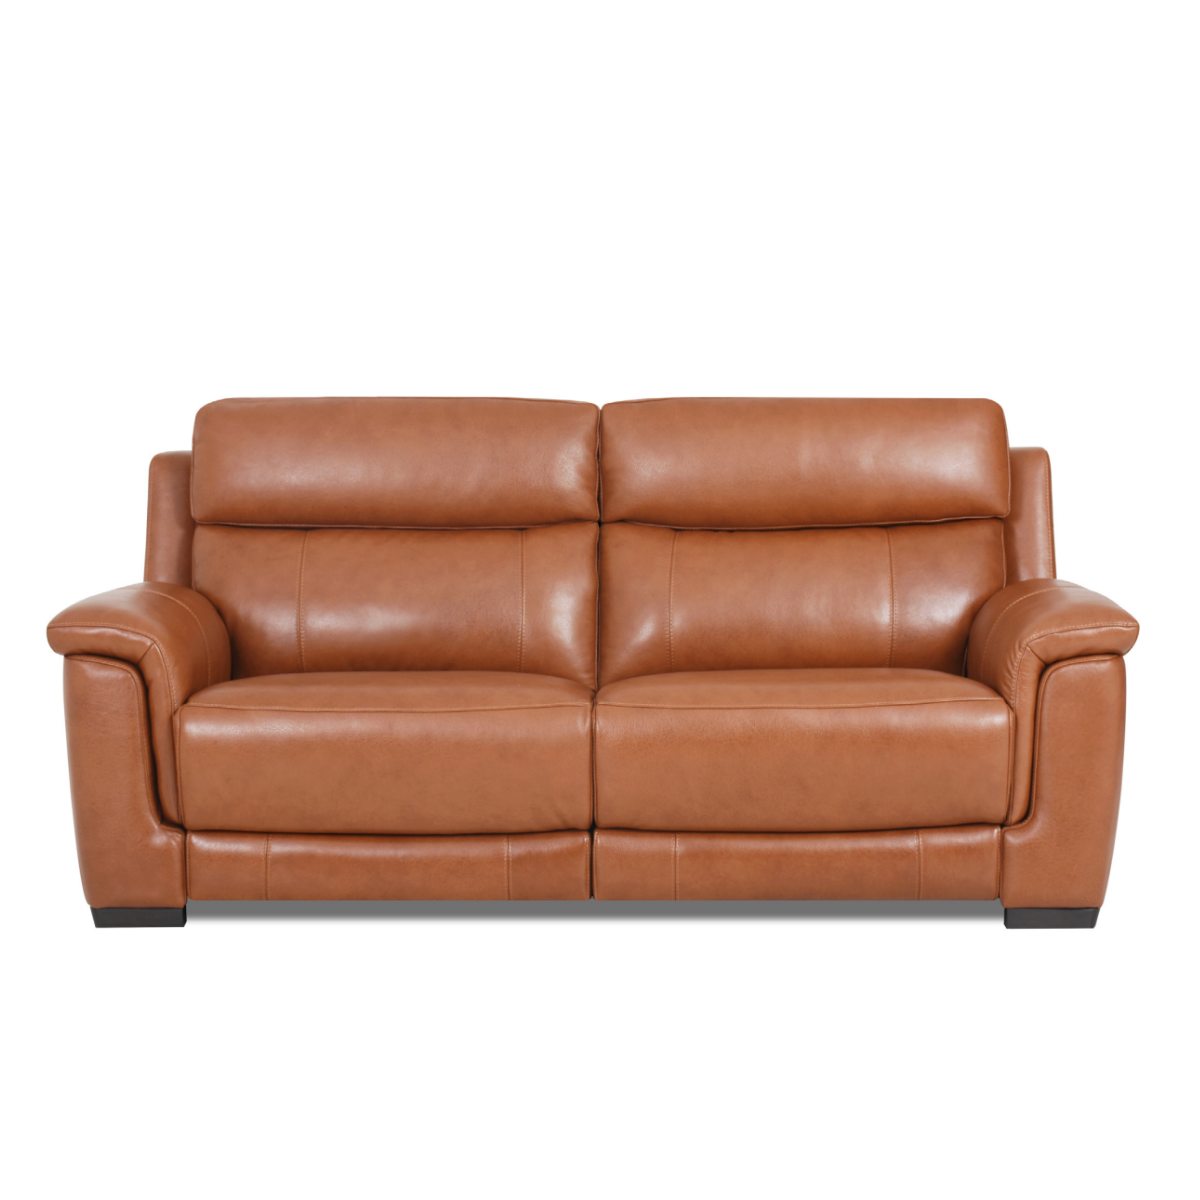 Preston 2 Seater Sofa - Pecan Brown Leather